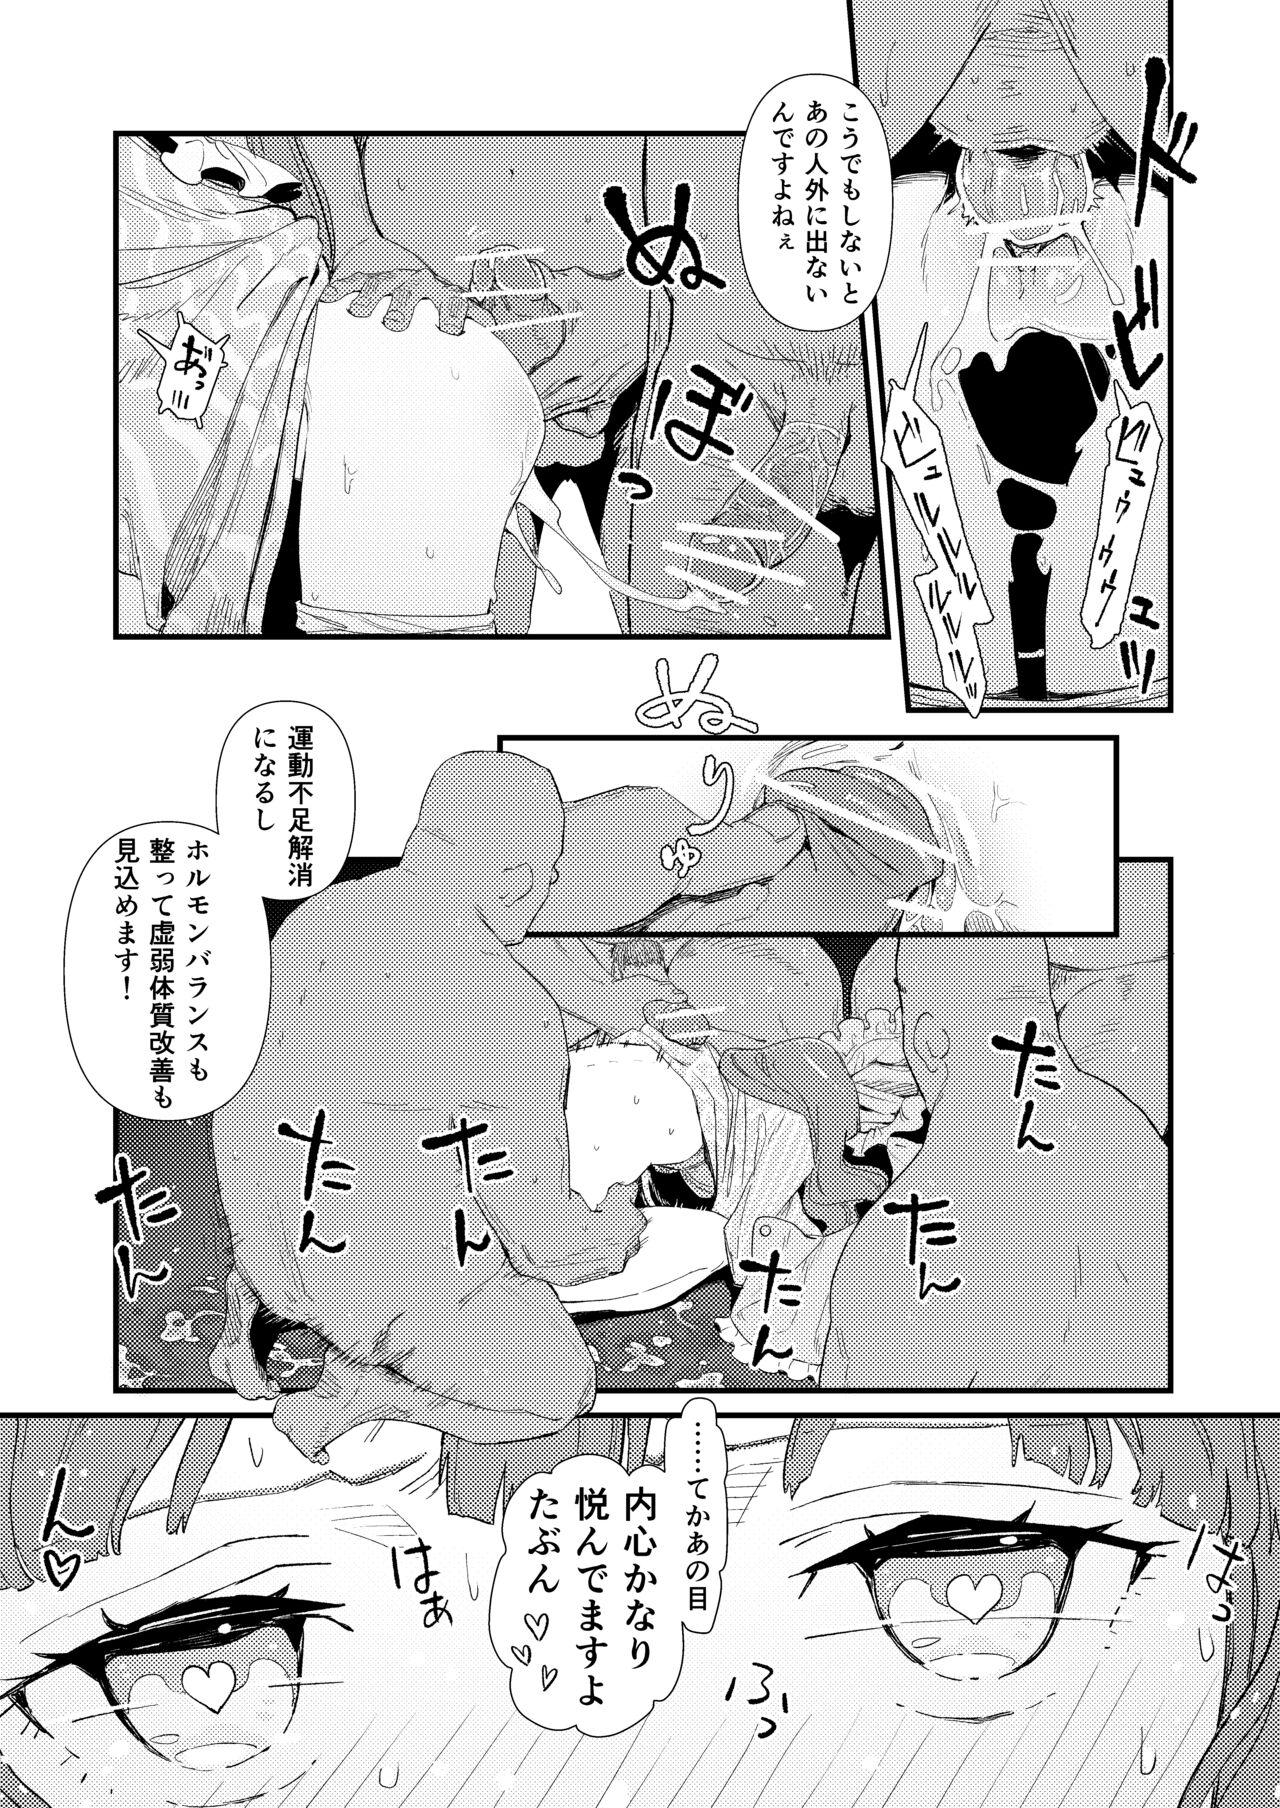 Mob Oji ②/R18/Manga/8p 2